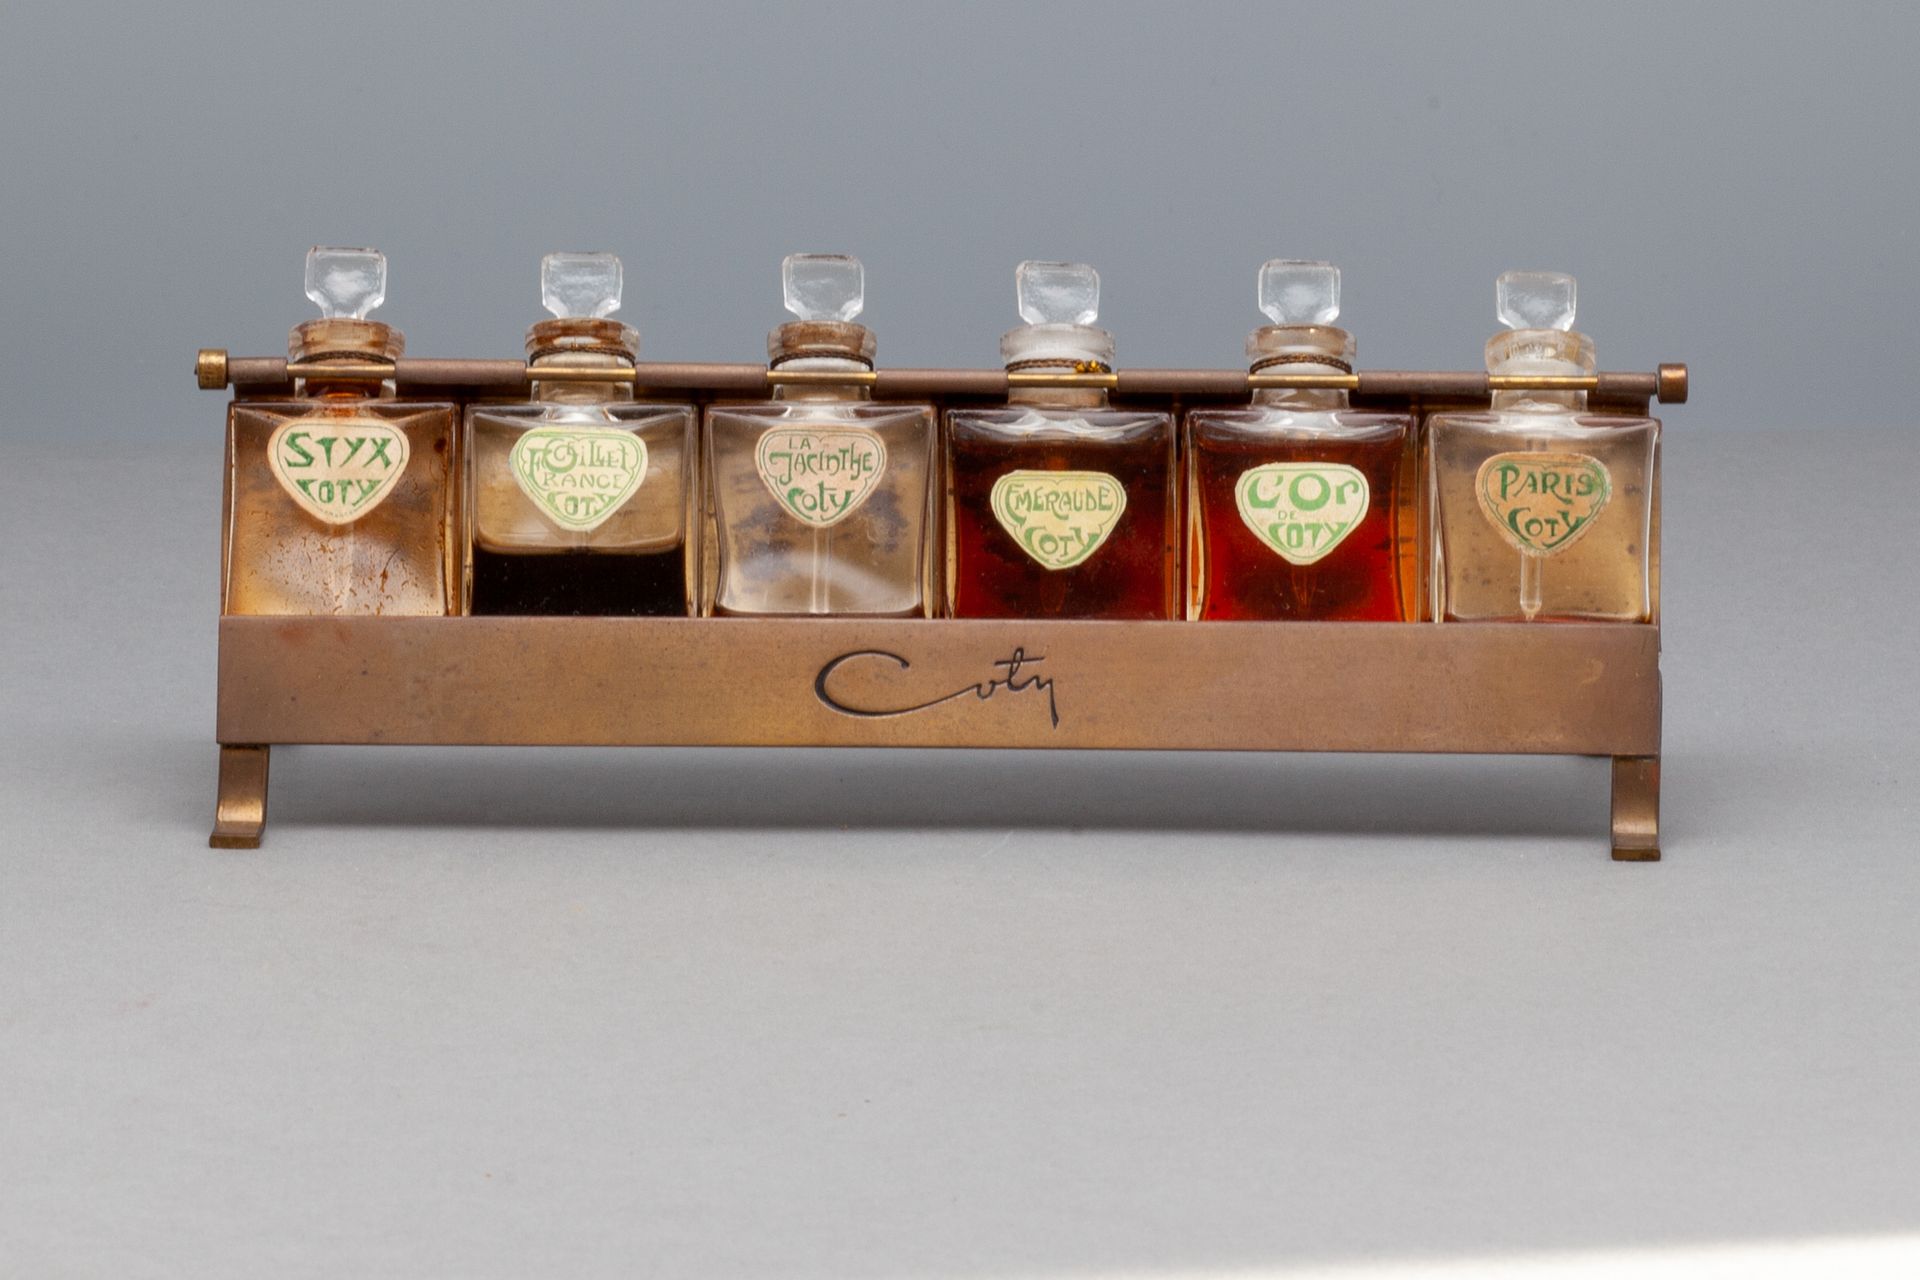 COTY 金属测试器展示，包含六个COTY瓶子："Styx"、"Œillet"、"Jacinthe"、"Emeraude"、"L'Or "和 "Paris"。瓶&hellip;